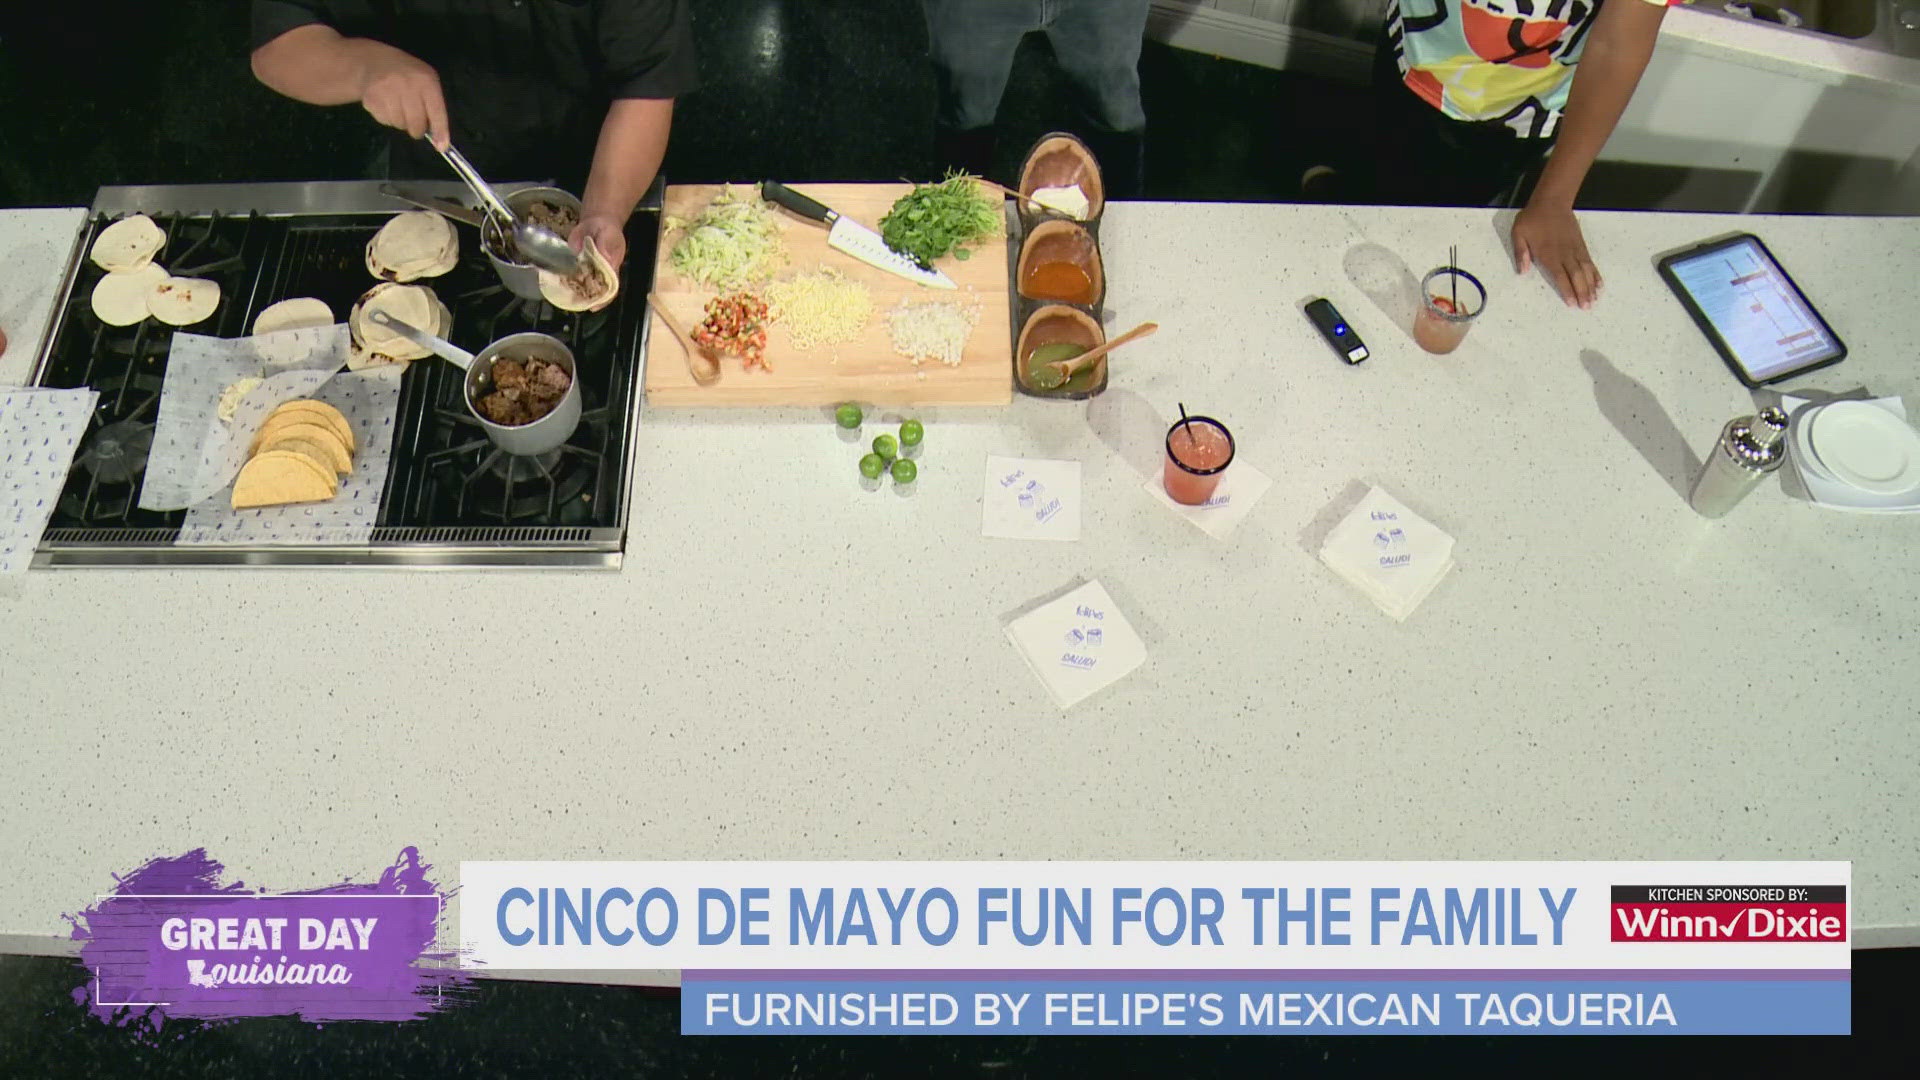 Felipe's Taqueria shared some recipes for some of their signature tacos!